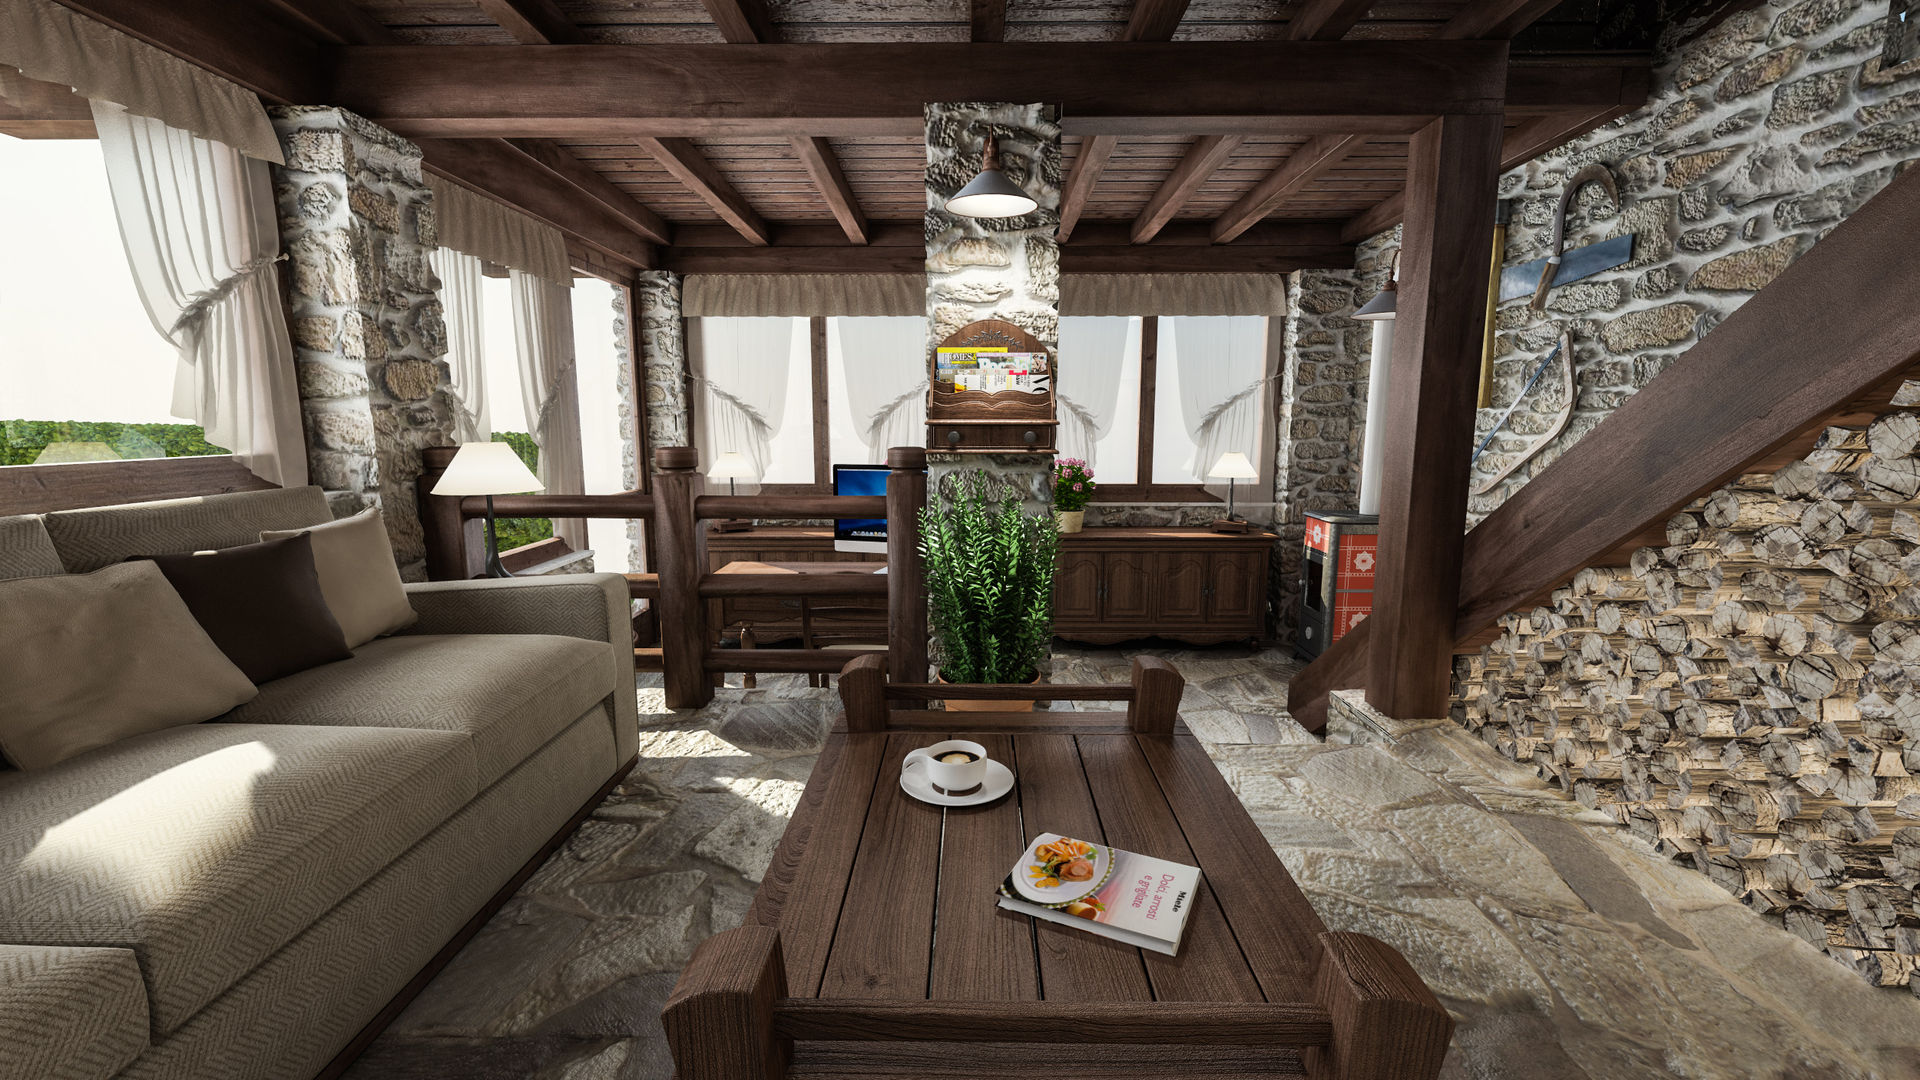 Casa in Collina, studiosagitair studiosagitair Country style living room